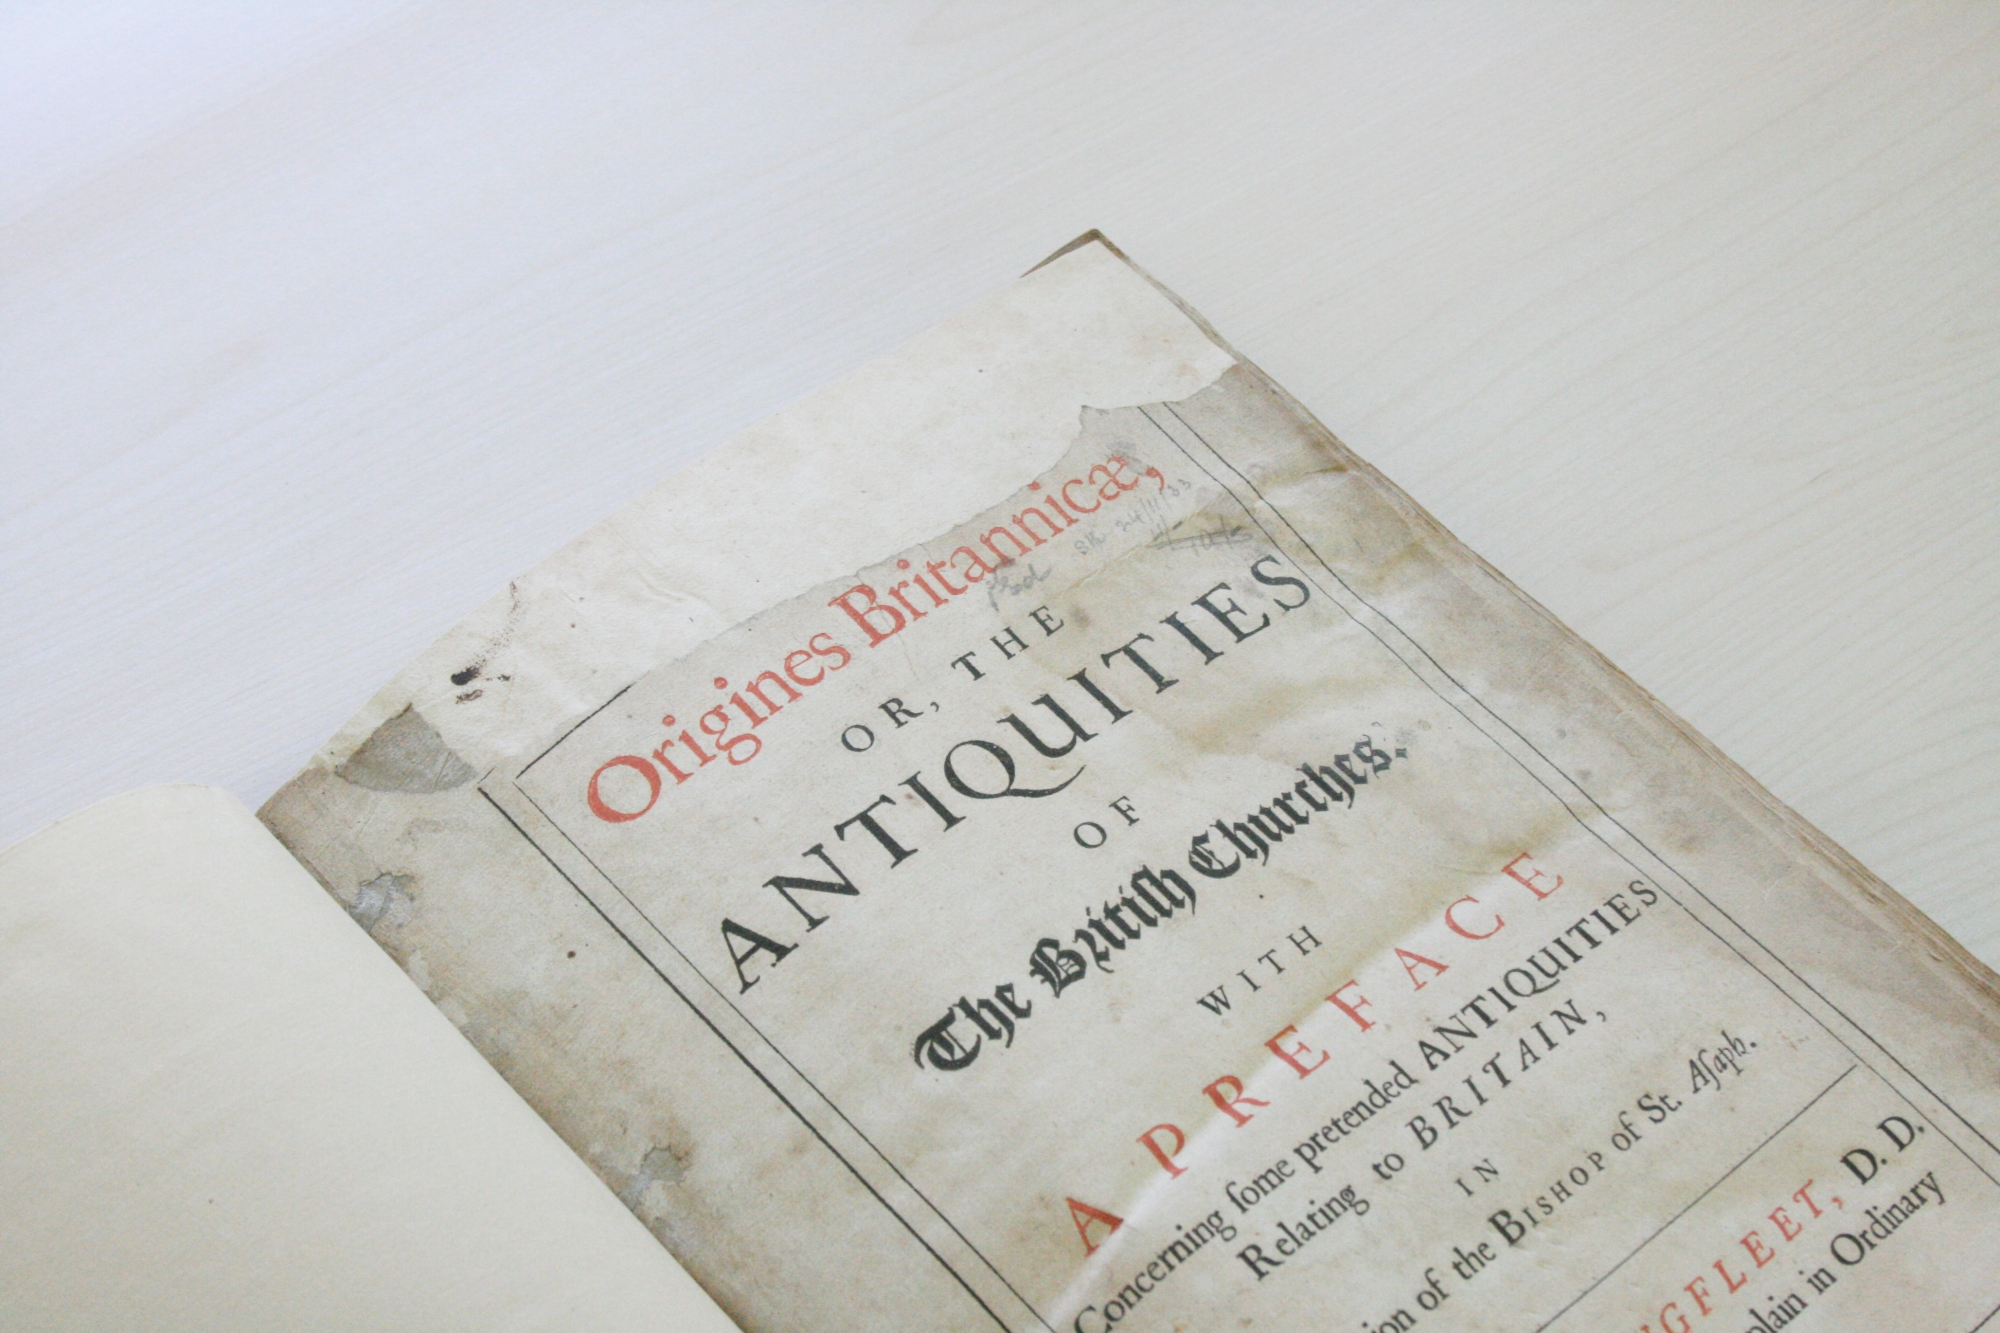 Front page of Origines Britannicae found in an Upright Piano colin henderson book